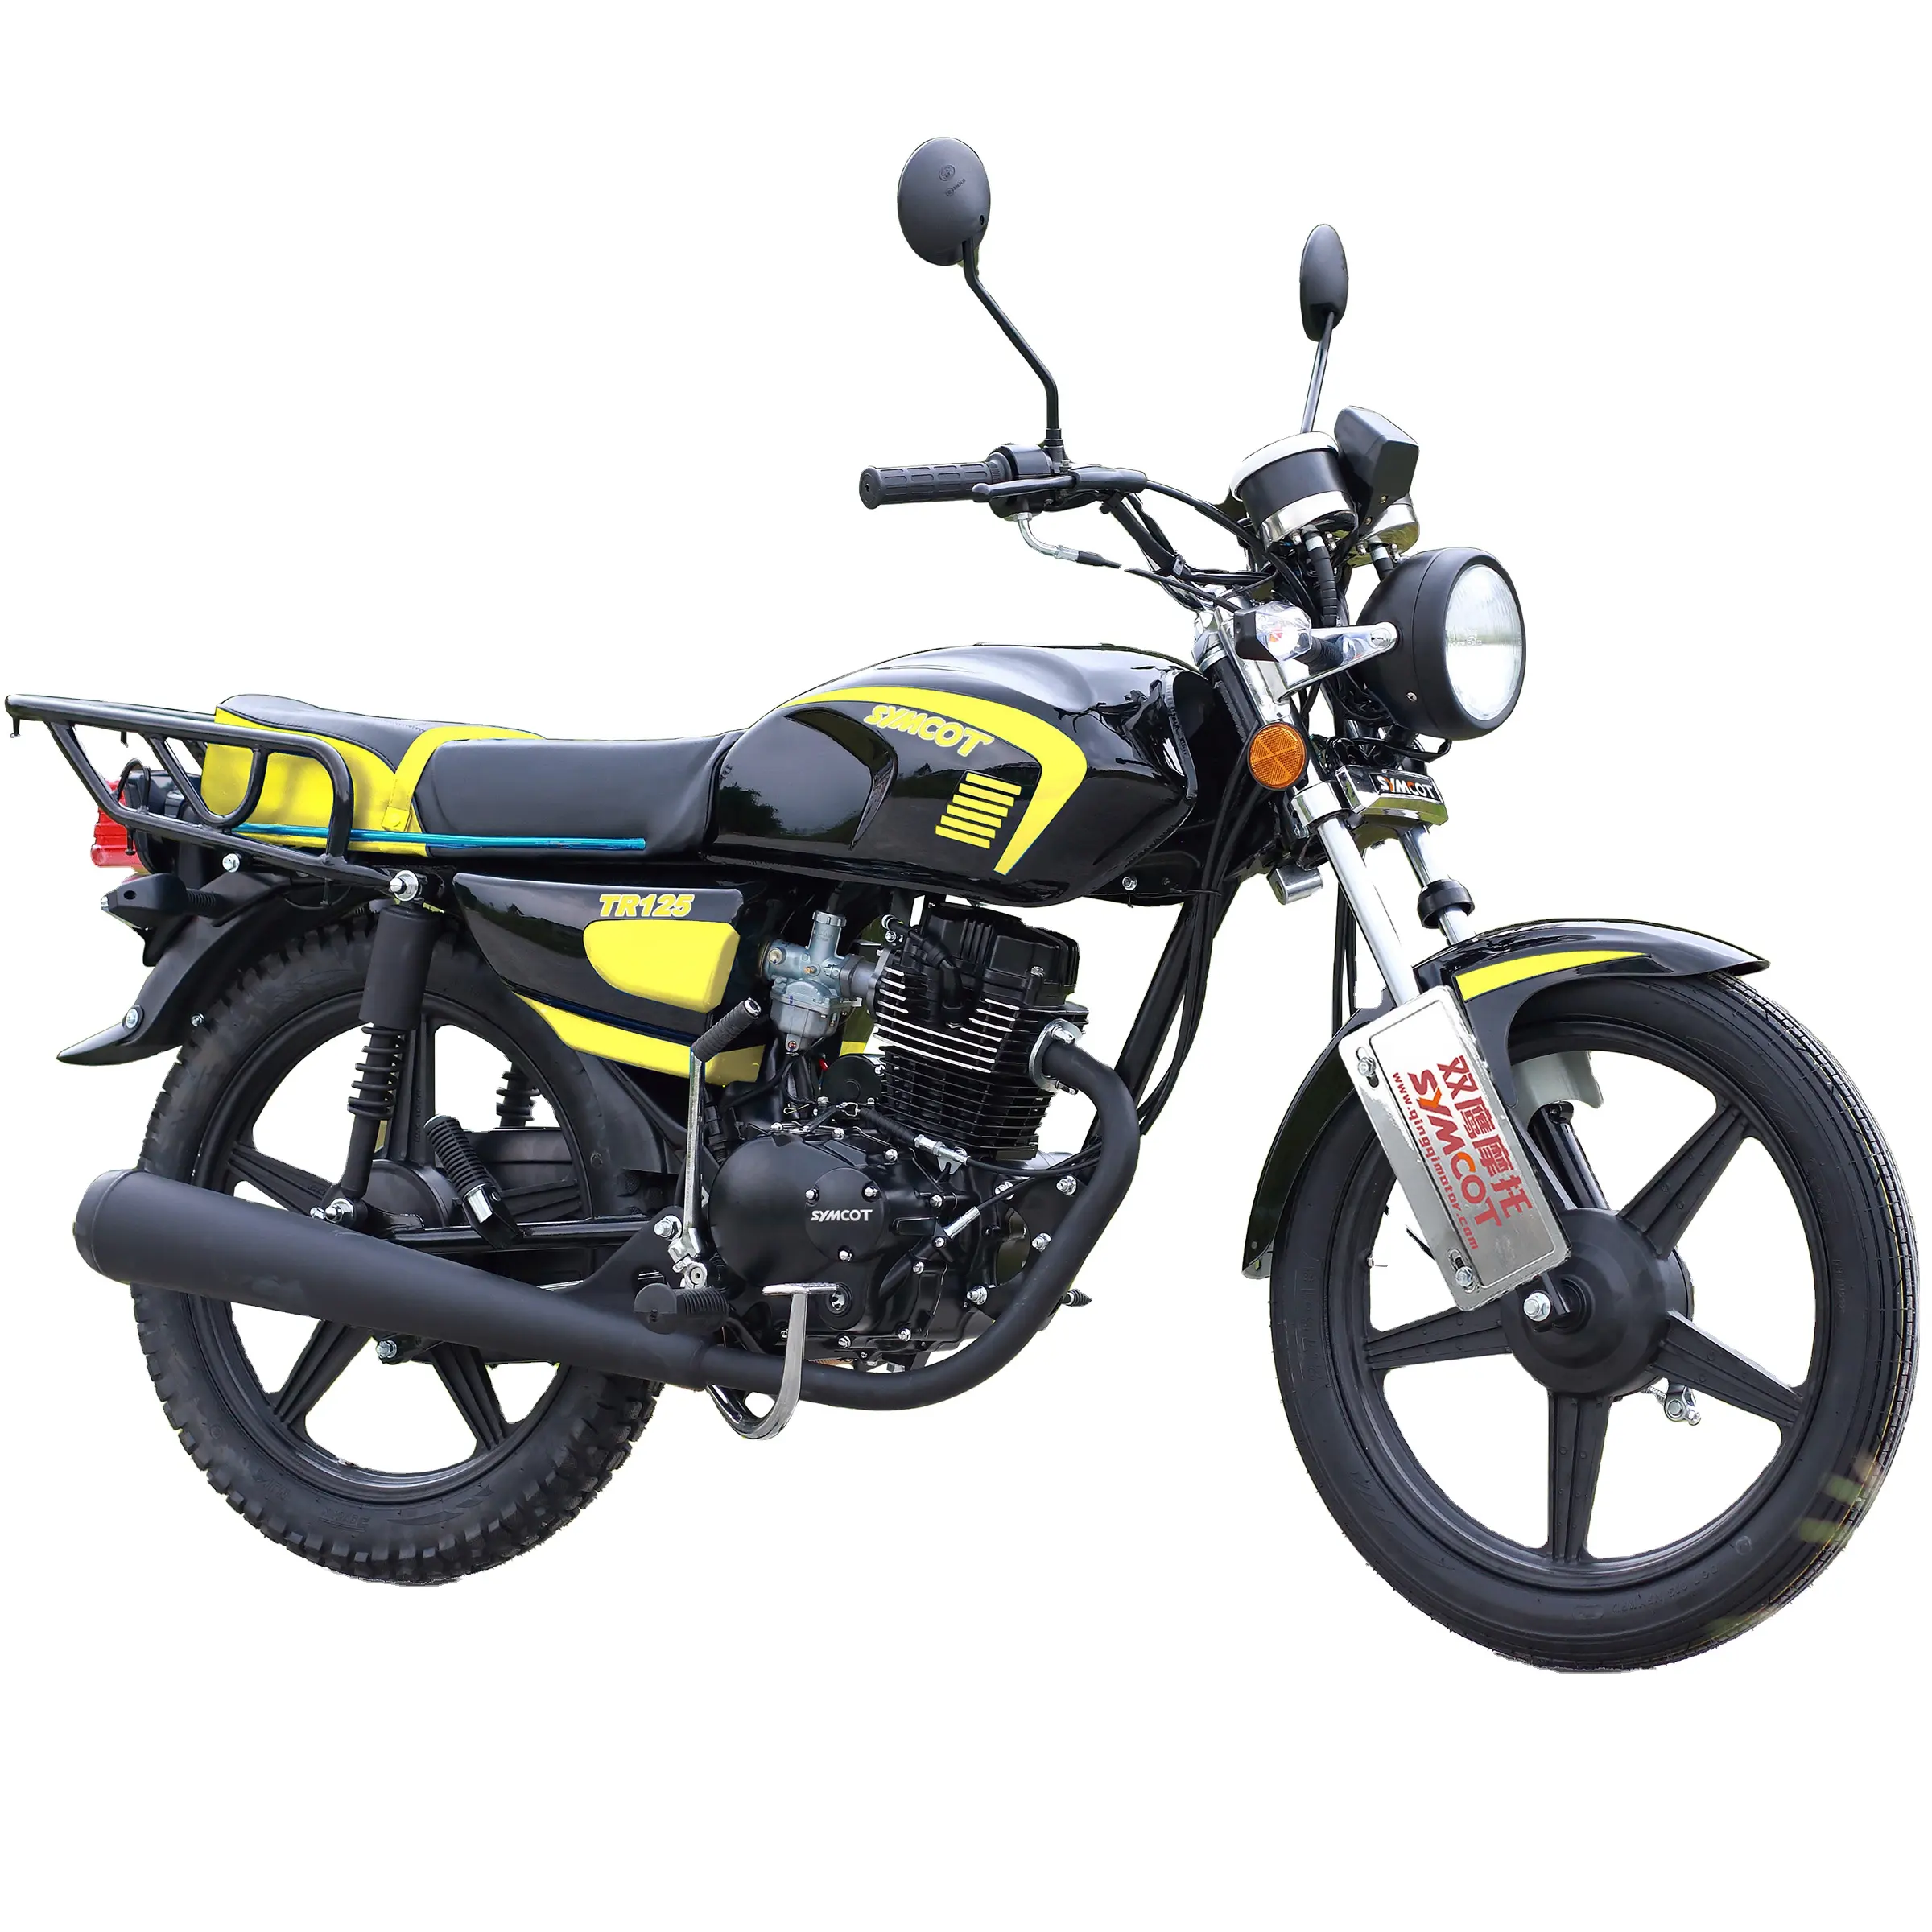 Motocicleta de alta potencia de fábrica, motocicleta cómoda, personalizada a gasolina, 150 c